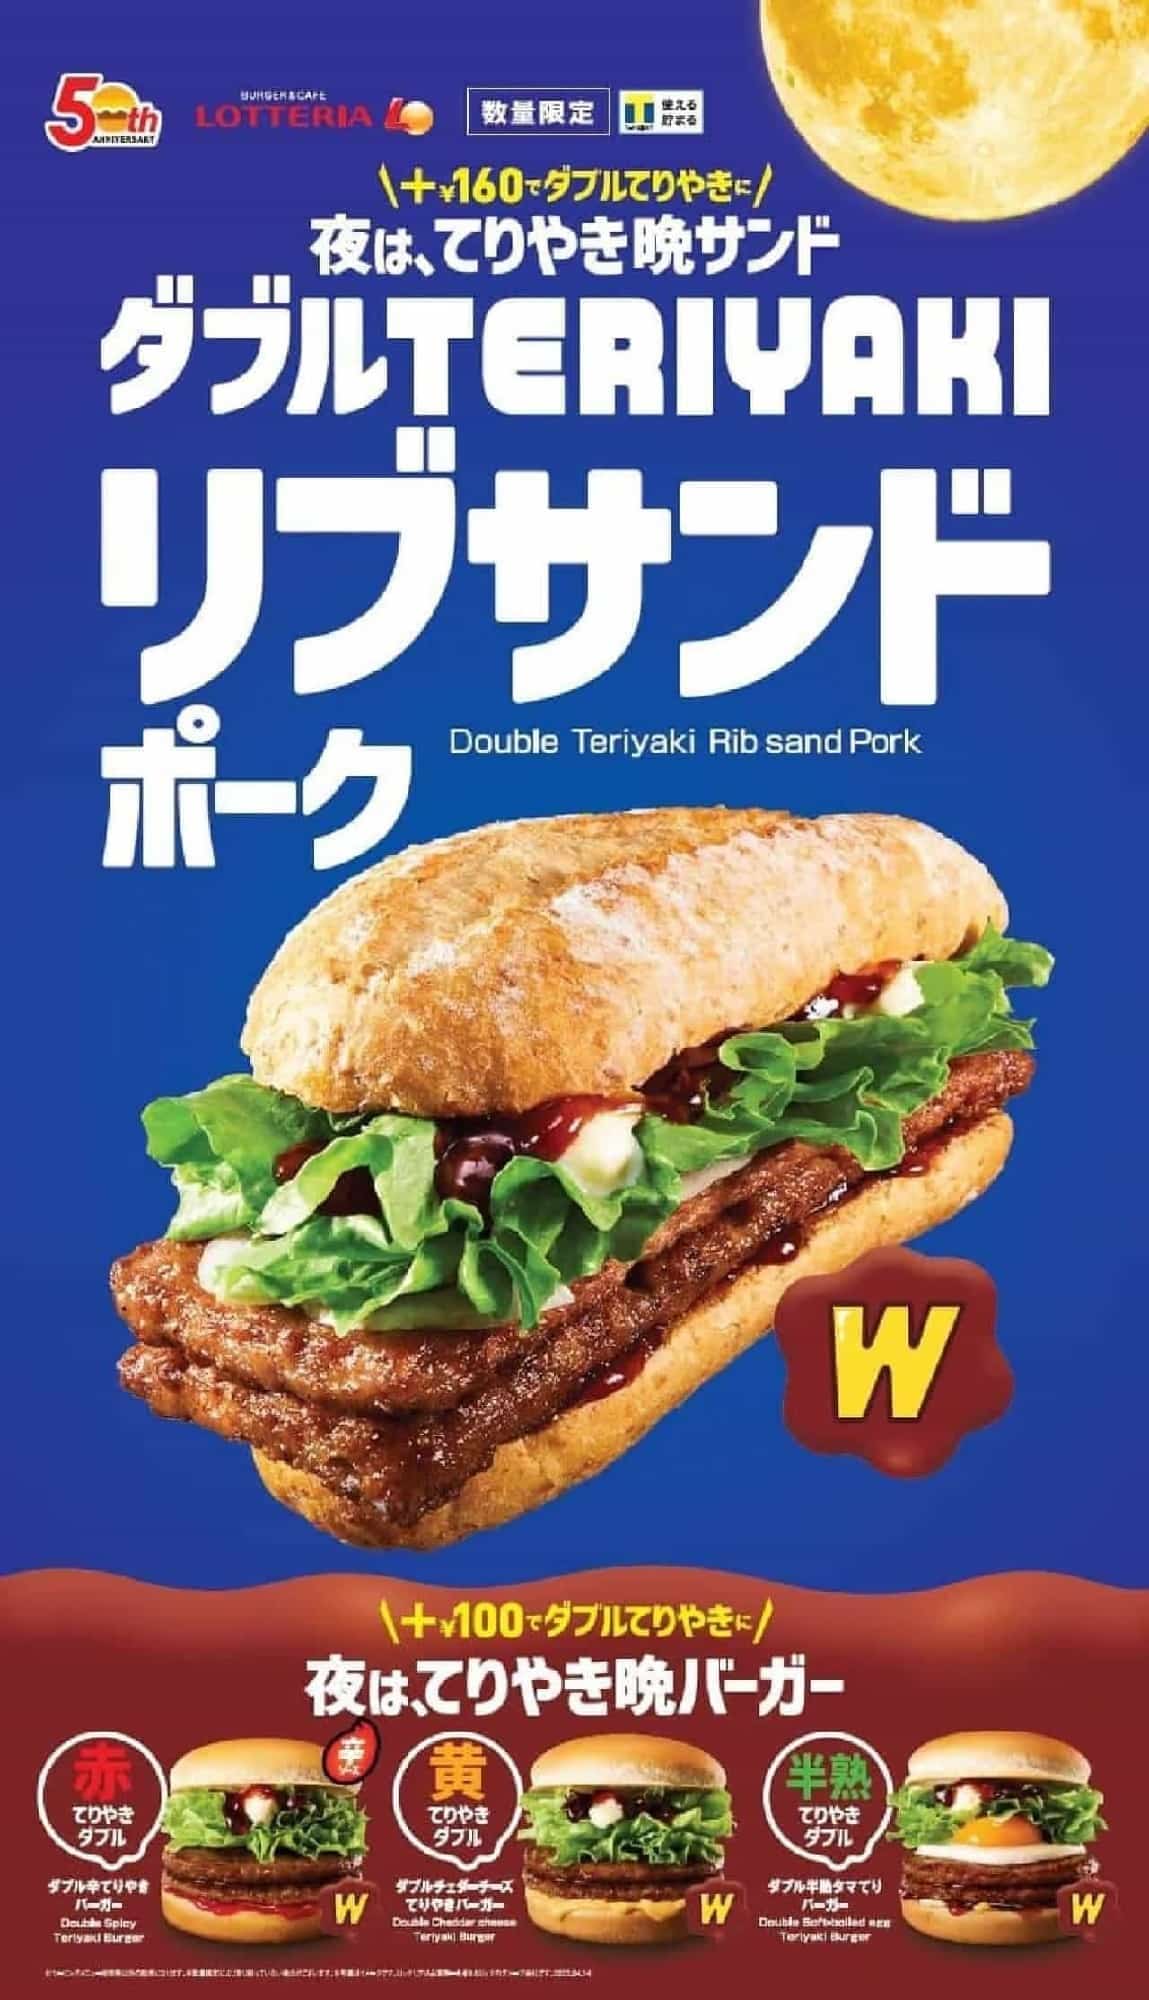 Lotteria "Double TERIYAKI Rib Sandwich Pork